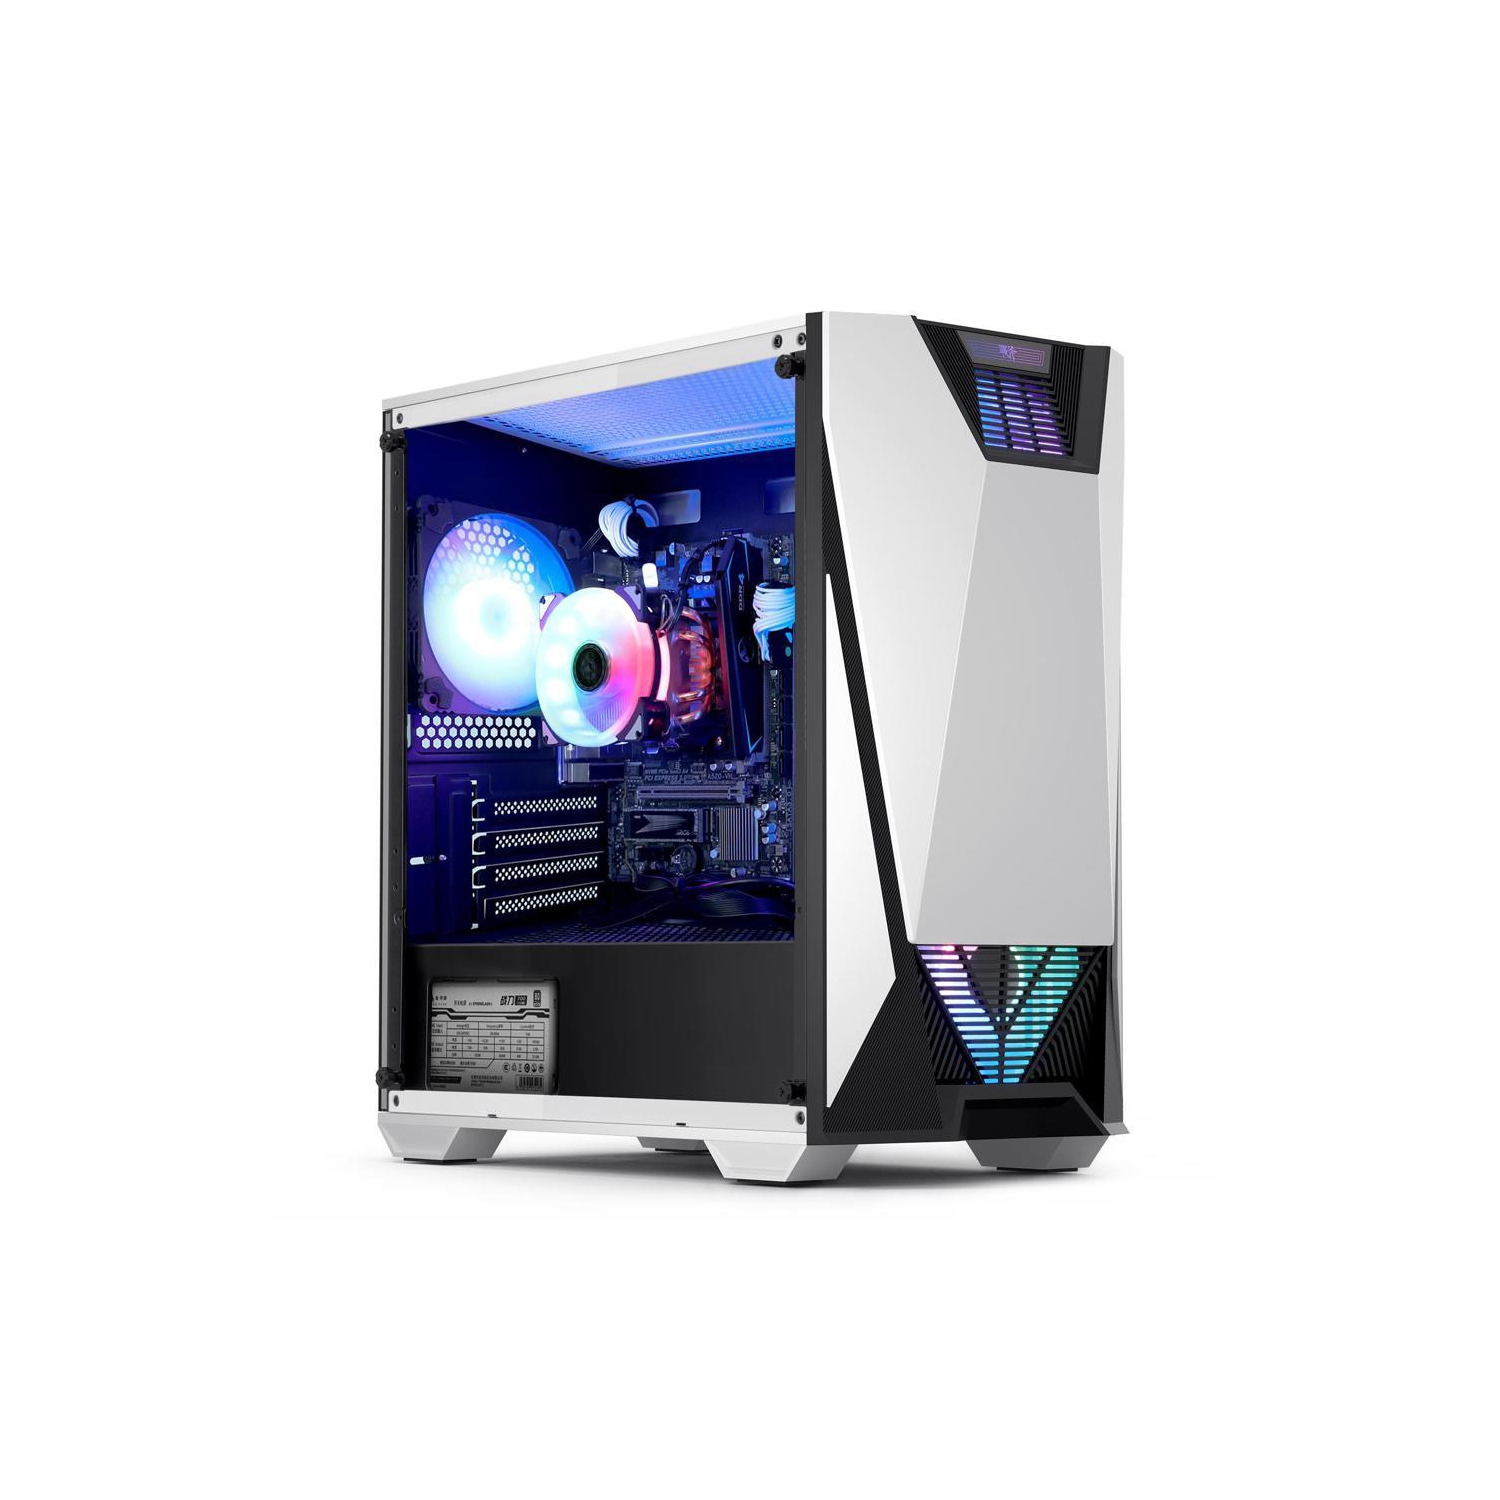 Hoengager Poseidon Gaming Desktop - Intel Core i5-12600K 10-Core 3.7GHz- 32GB DDR4 3200MHz - 500GB M.2 NVMe SSD- WIFI -RGB Fans - Windows 11 Pro Desktop Computer-White